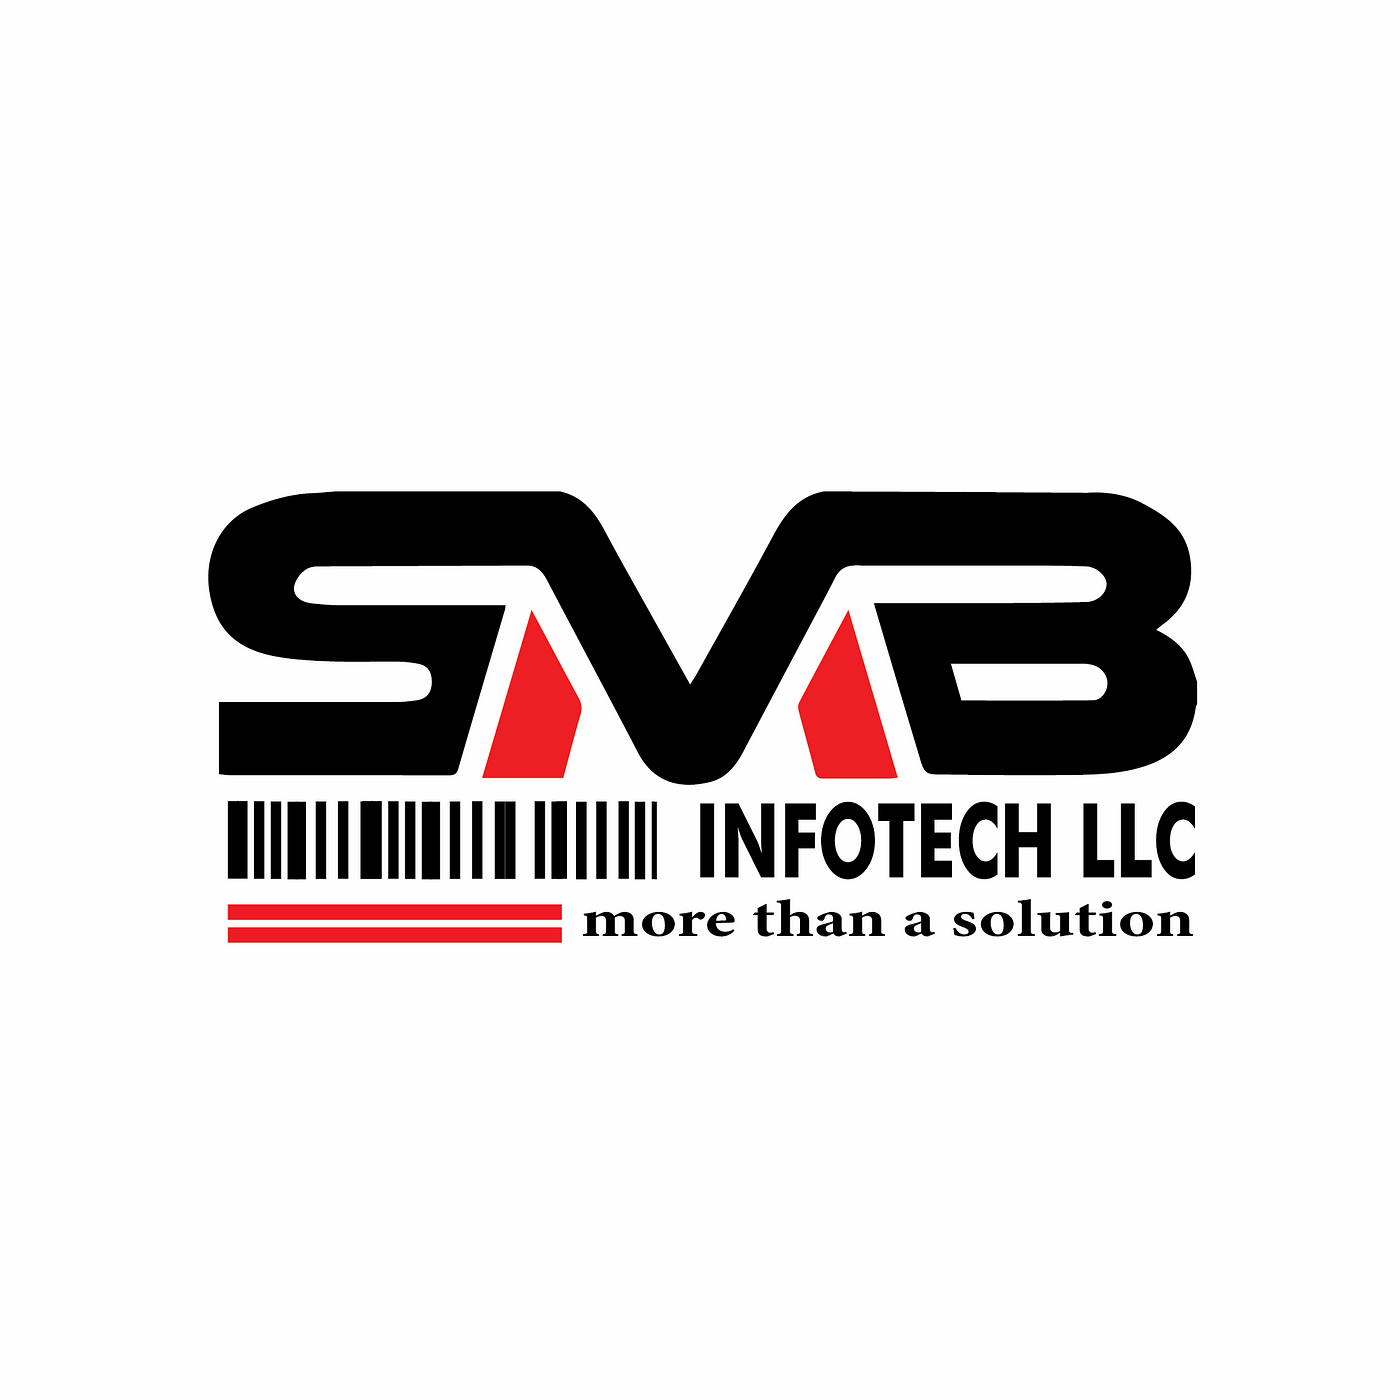 SMB INFOTECH LLC